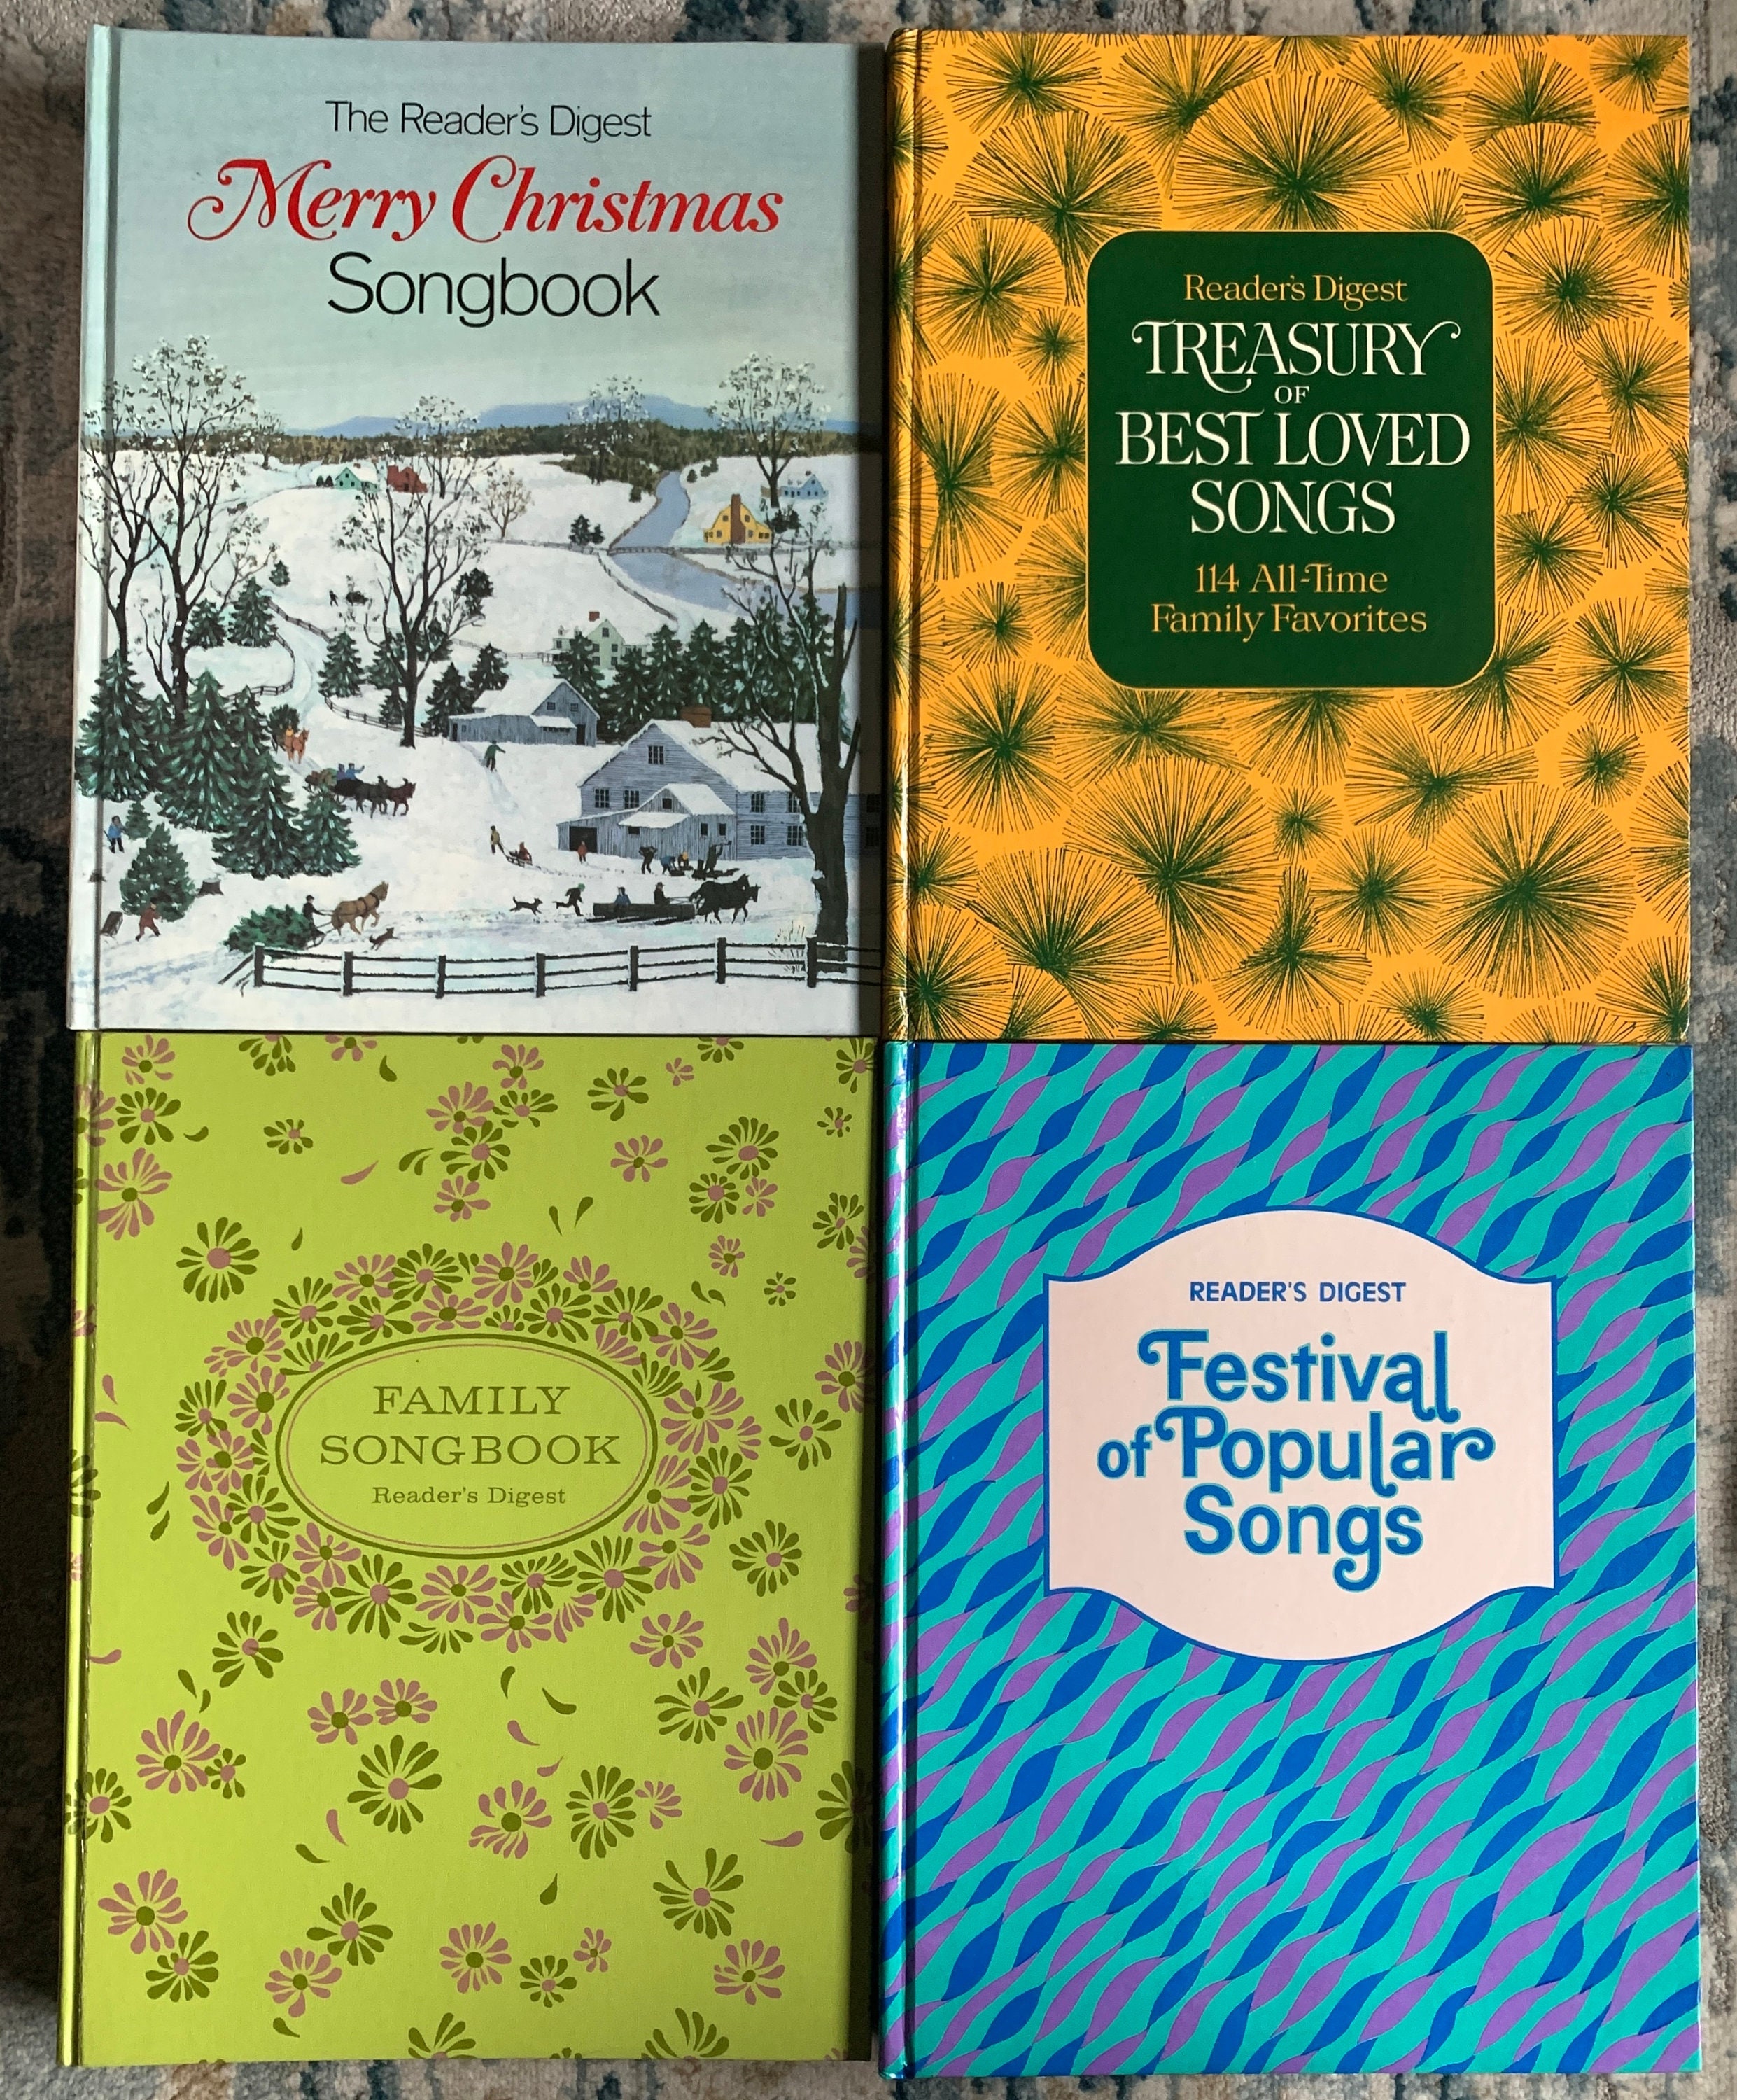 Sold Separately, Reader's Digest Songbooks, Binder of Music, Vintage Music  